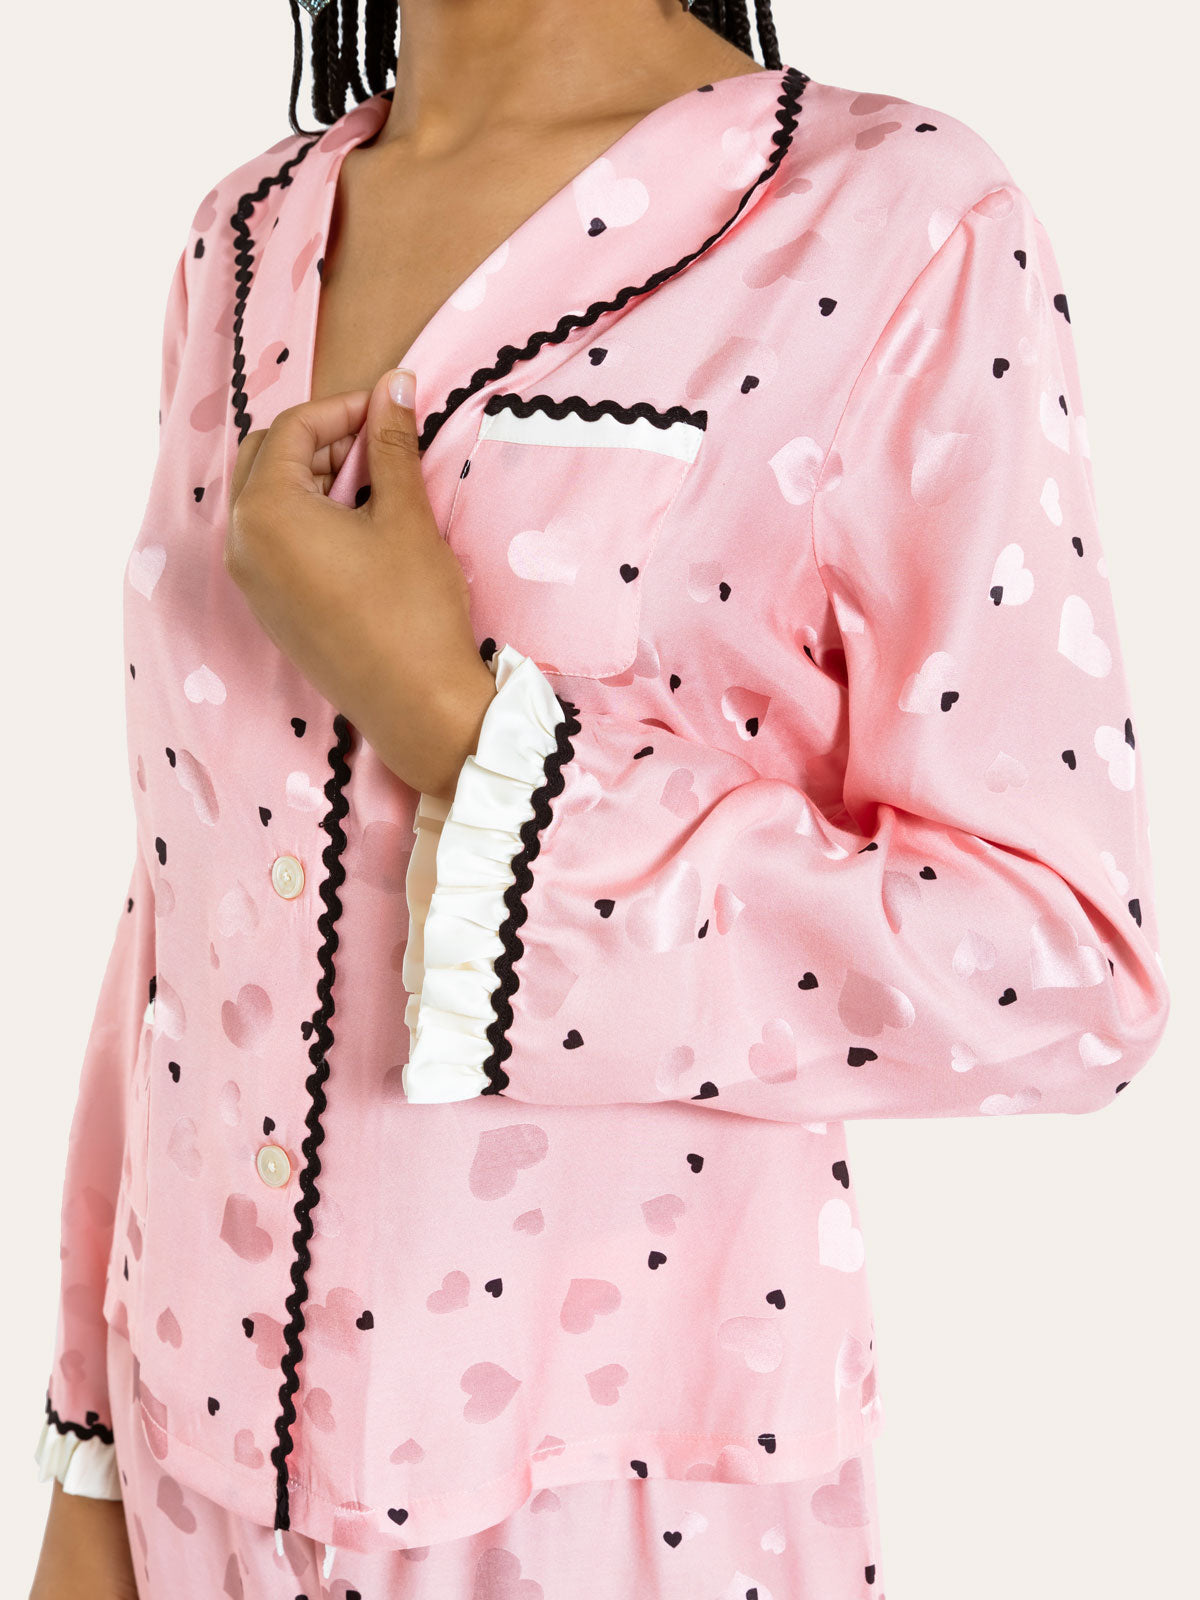 Mimi Margo PJ Set Pretty in Pink By Morgan Lane